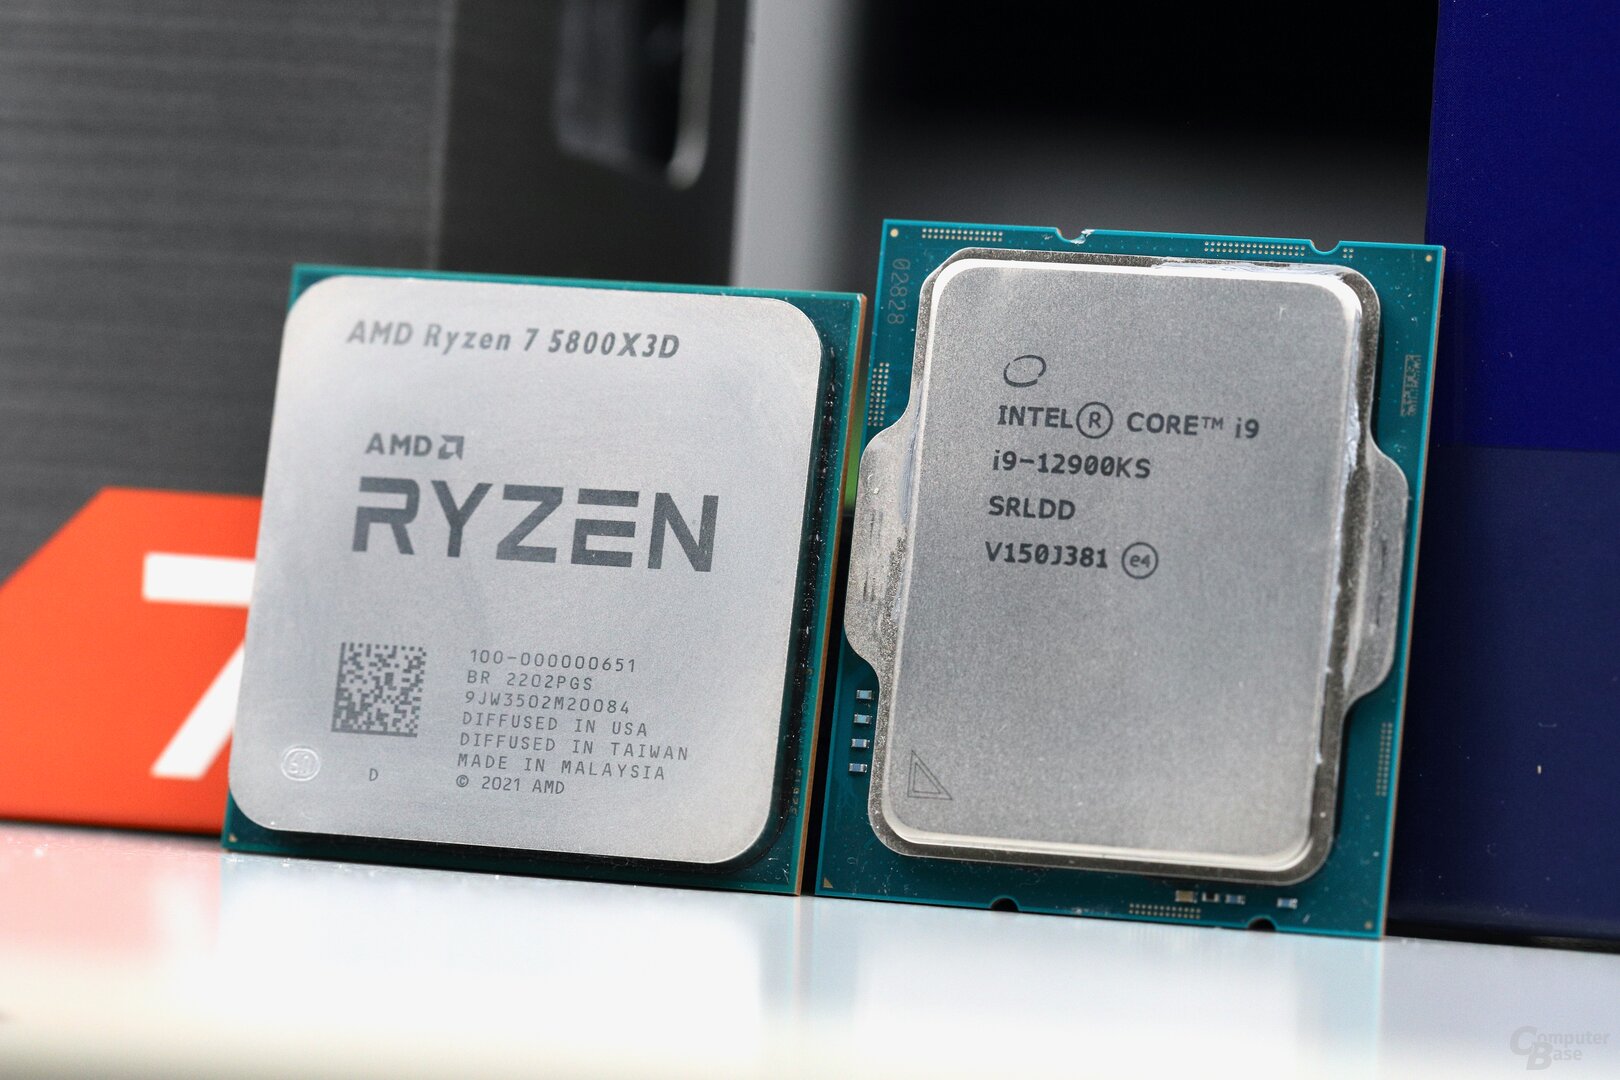 AMD Ryzen 7 5800X3D review: cache is king